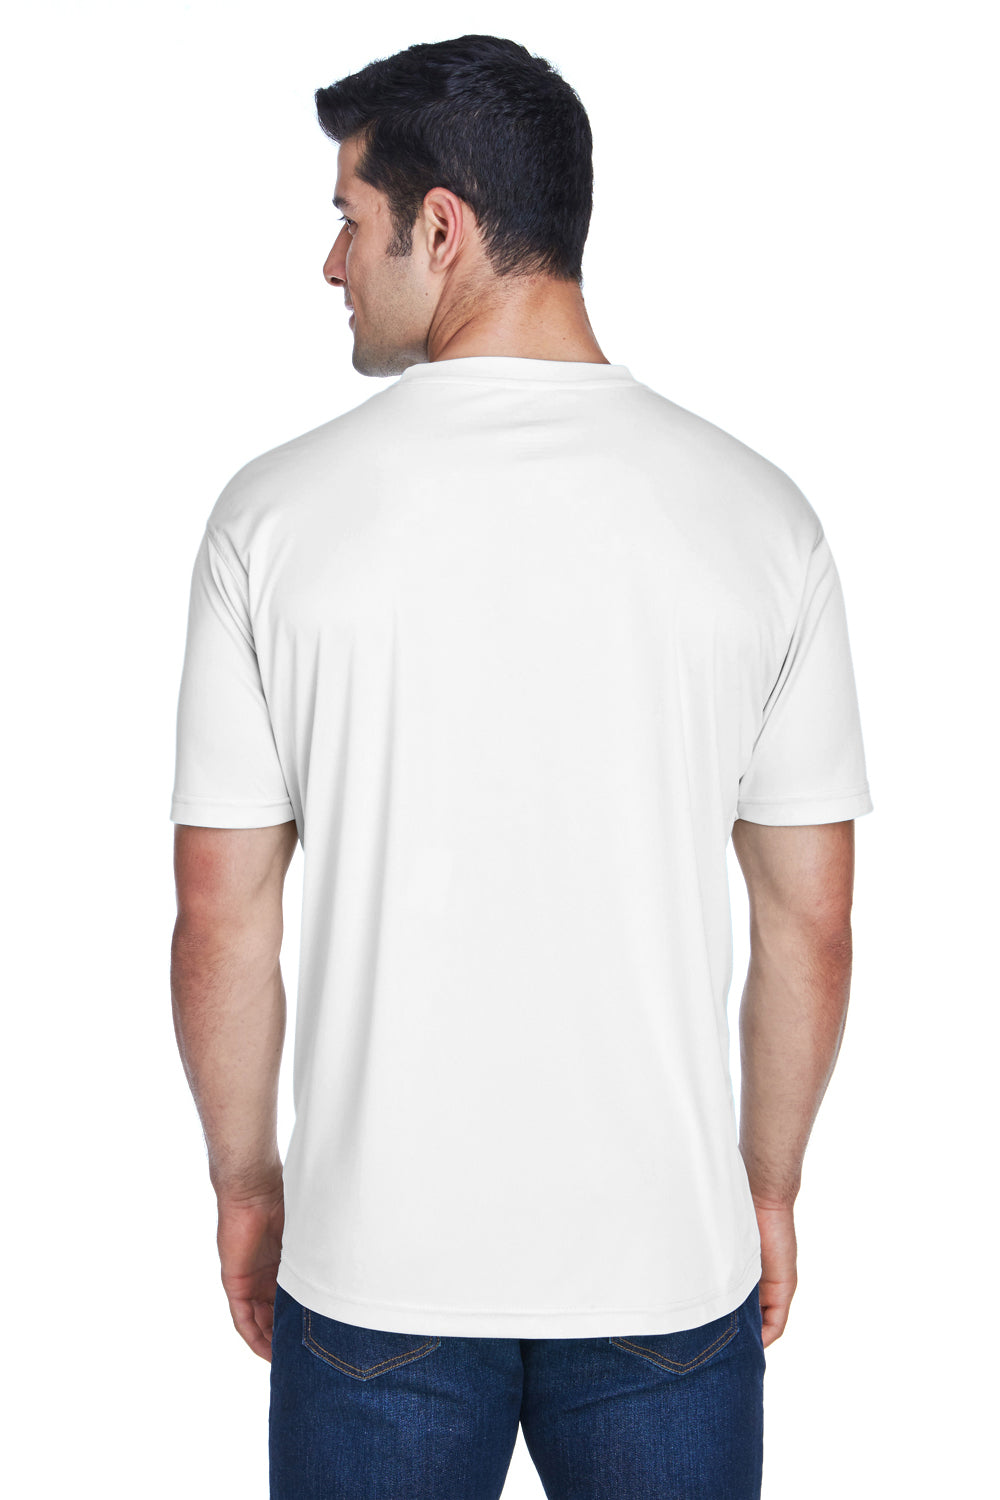 UltraClub 8420 Mens Cool & Dry Performance Moisture Wicking Short Sleeve Crewneck T-Shirt White Back